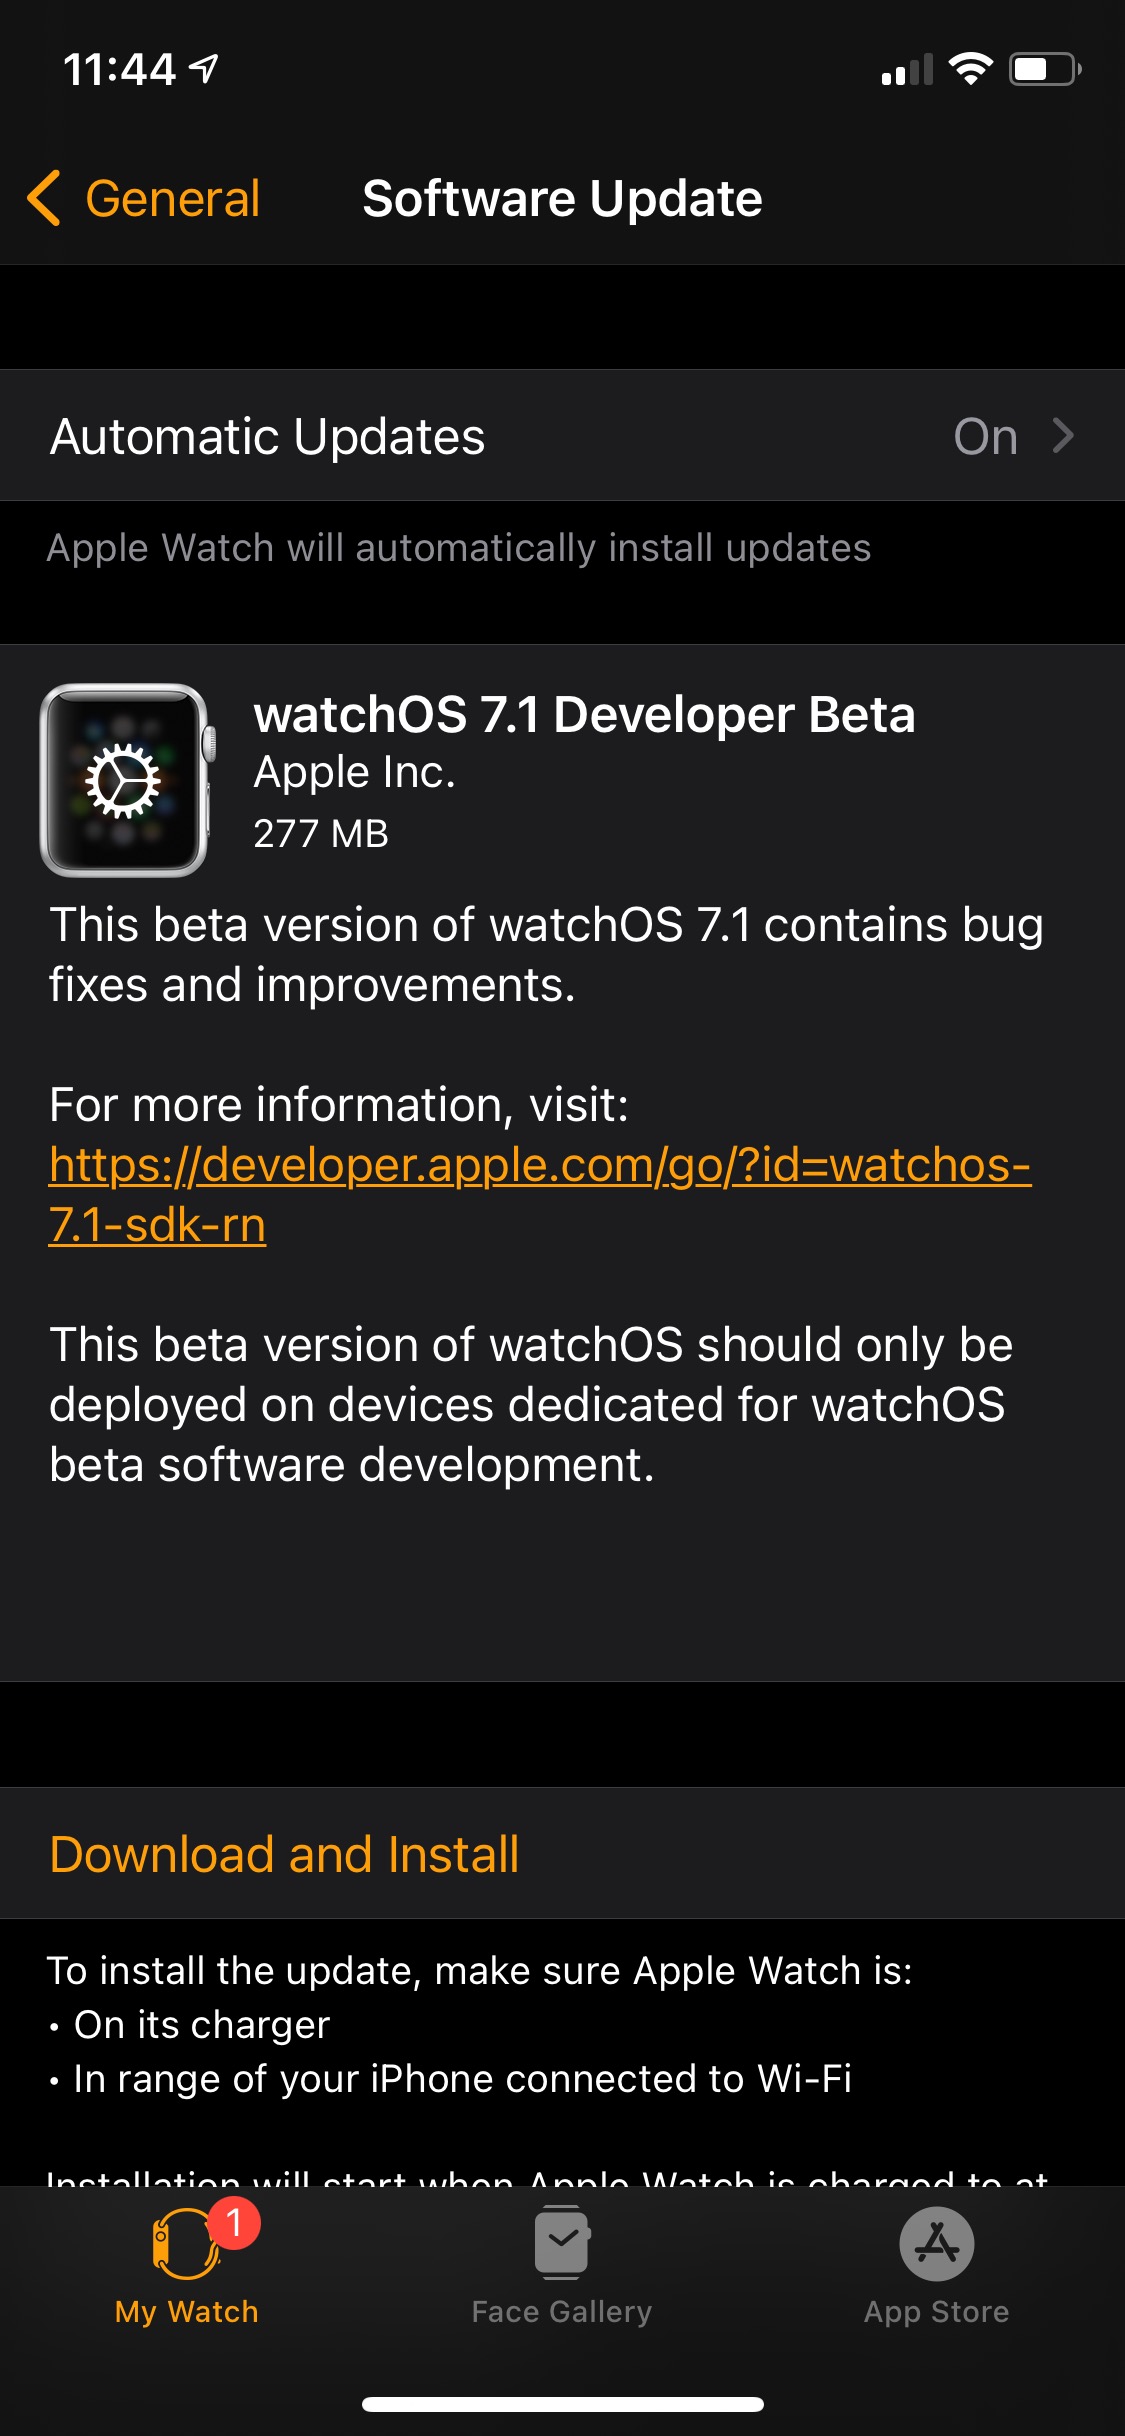 Apple Seeds watchOS 7.1 Beta to Developers [Download]